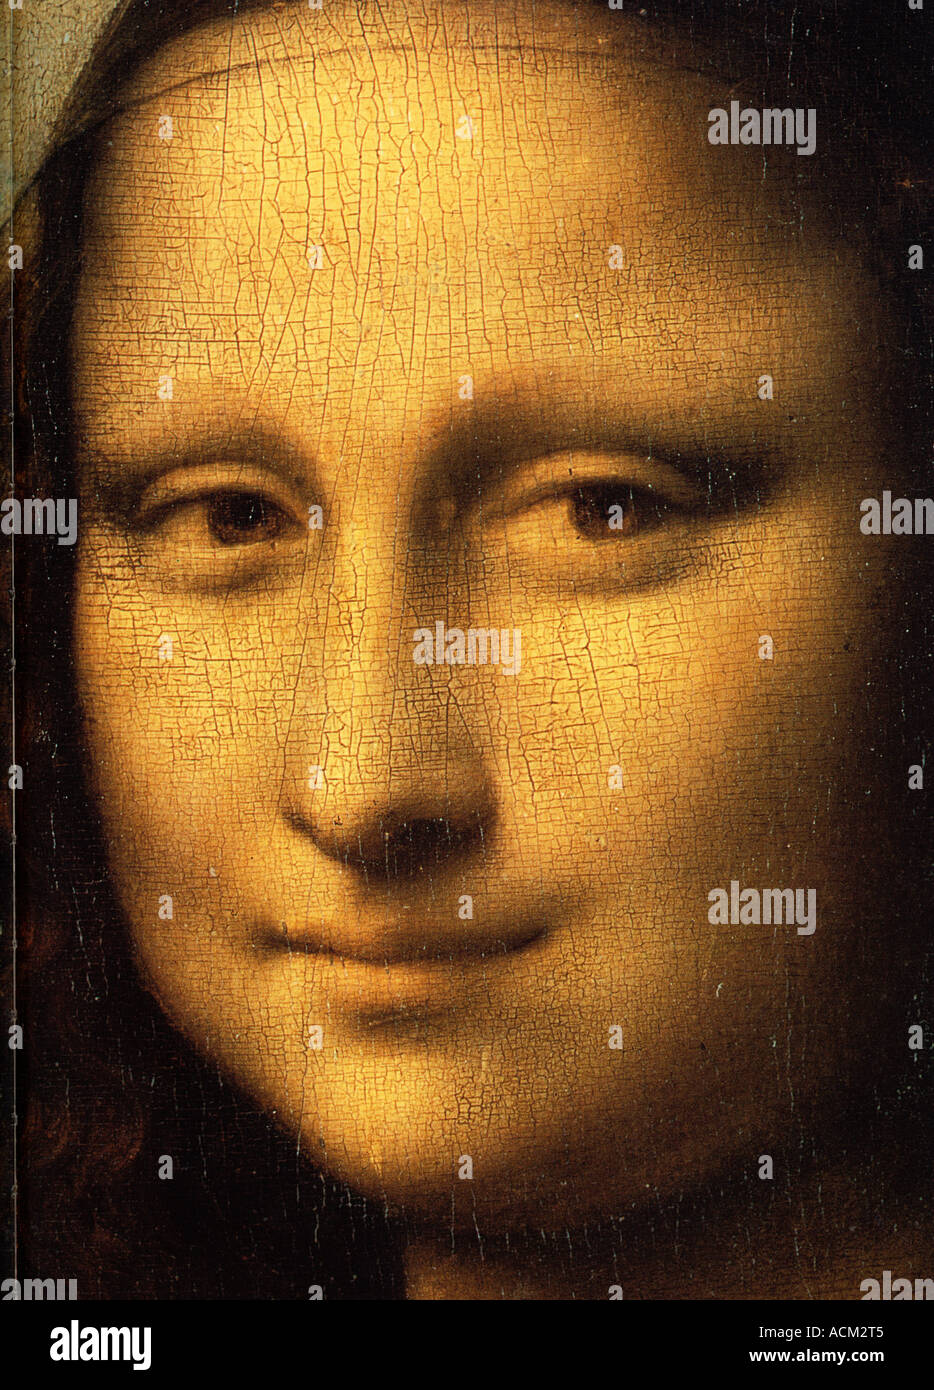 Leonardo da Vinci Mona Lisa Banque D'Images